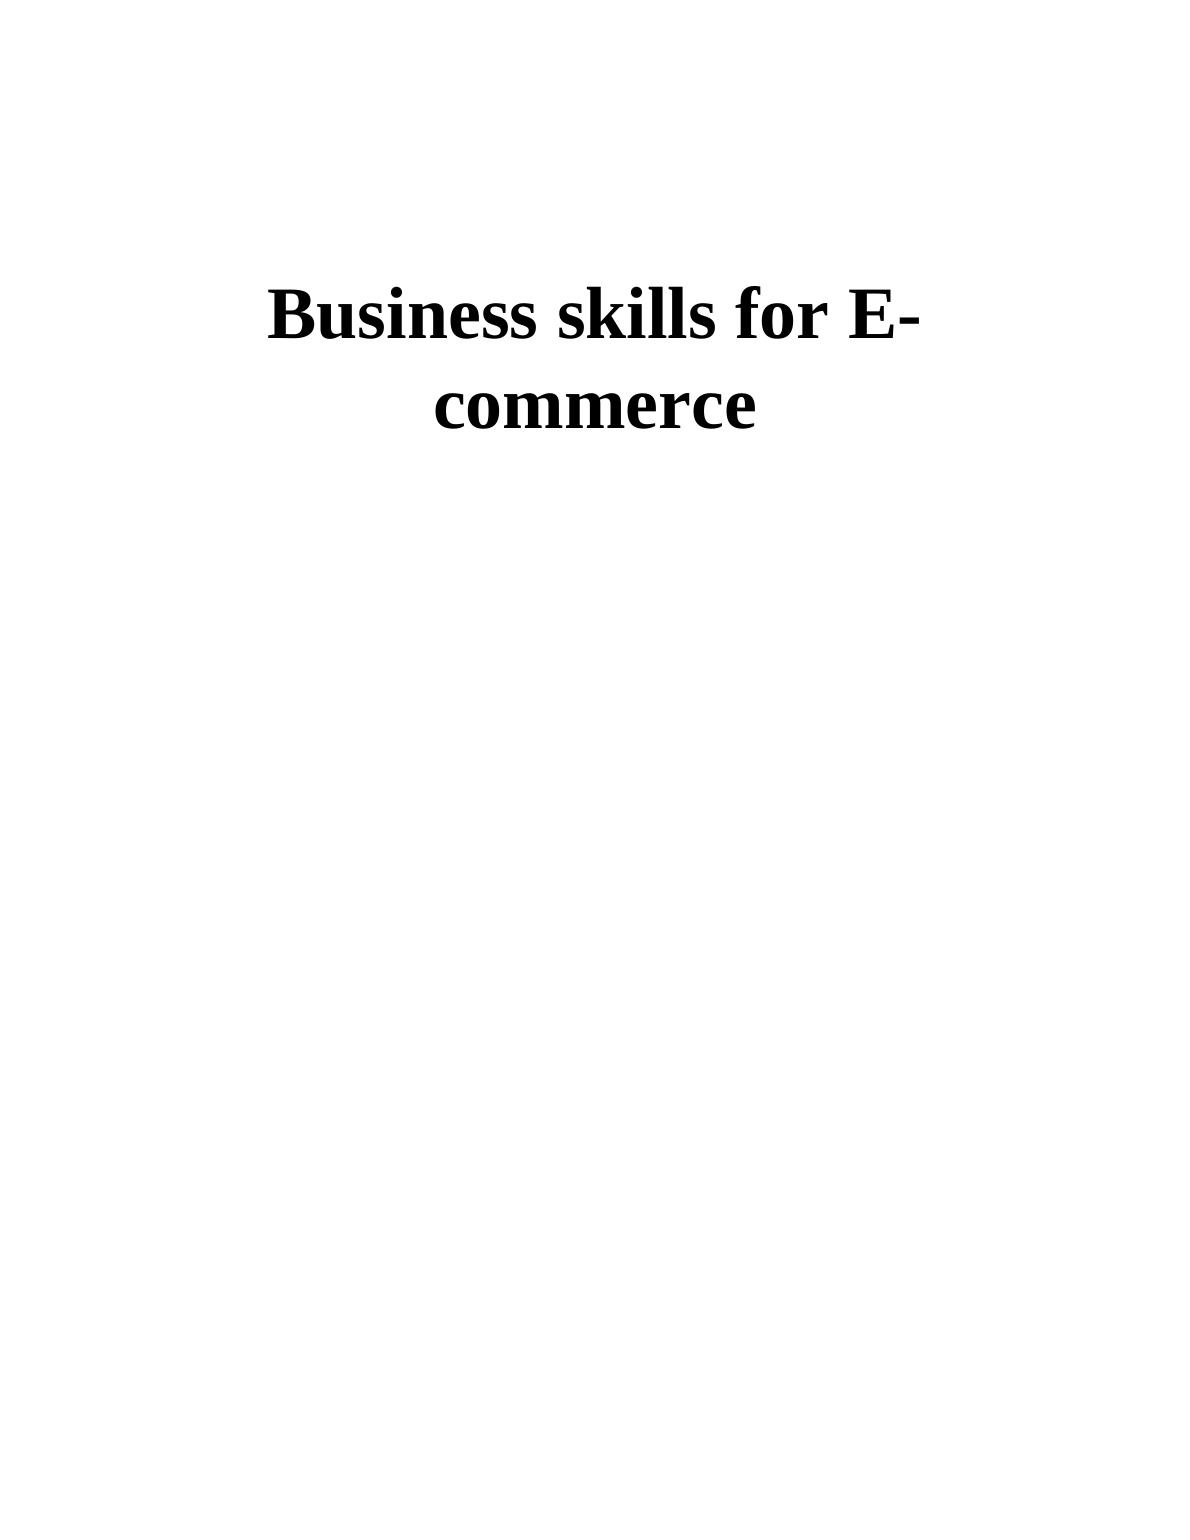 Report on Business skills for E-commerce_1